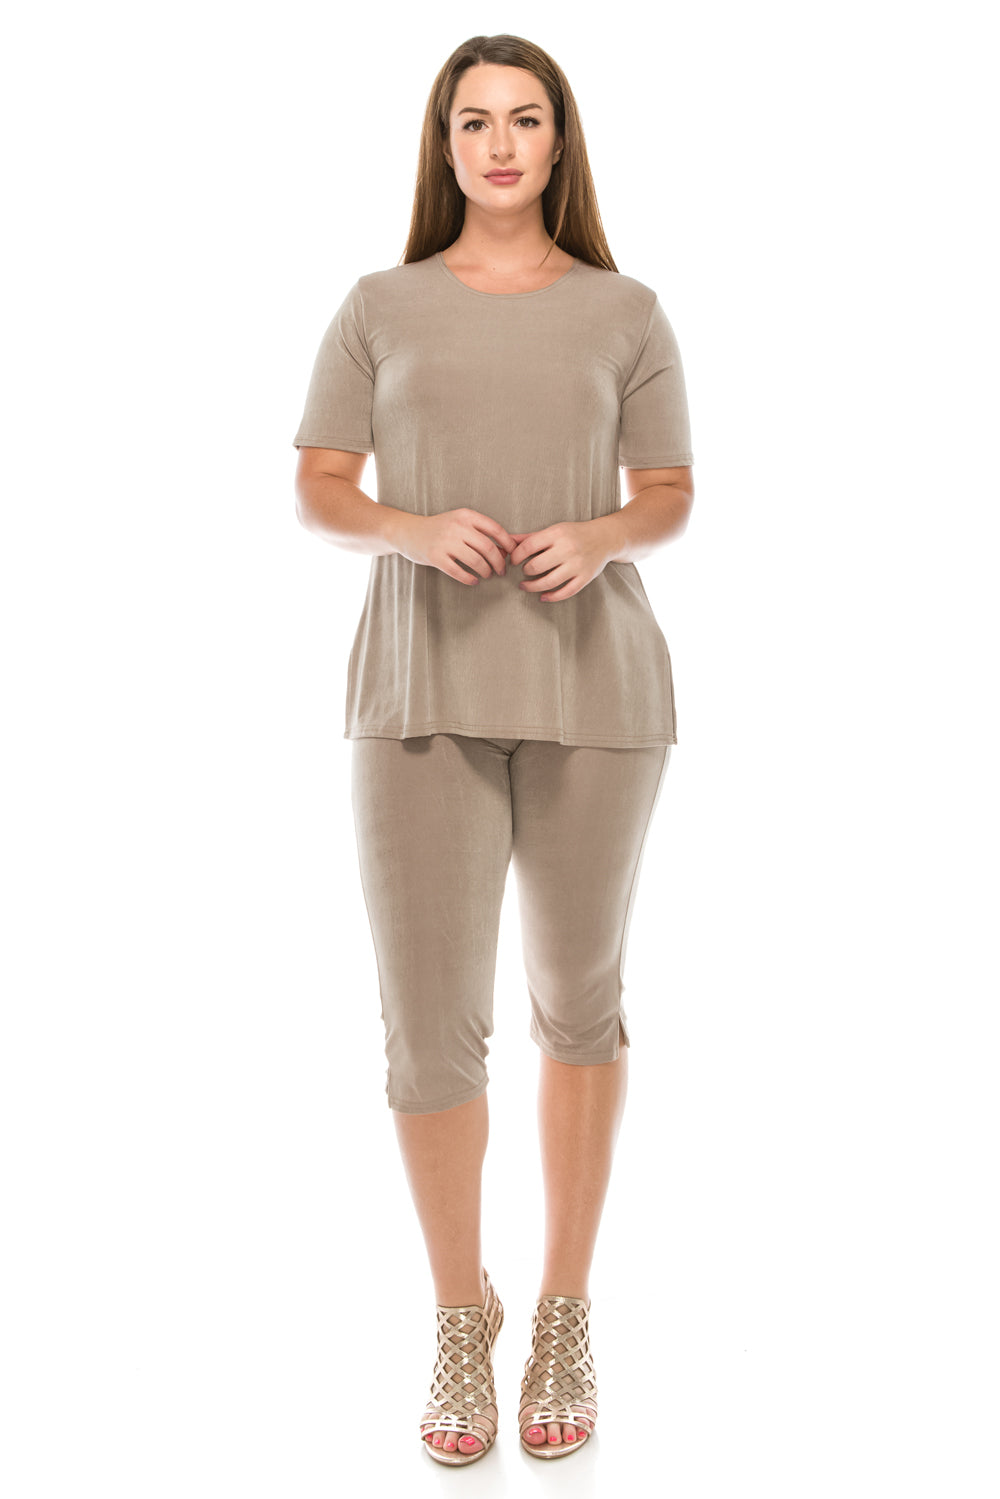 Jostar Women's Stretchy Capri Pant Set Short Sleeve, 903BN-S - Jostar Online